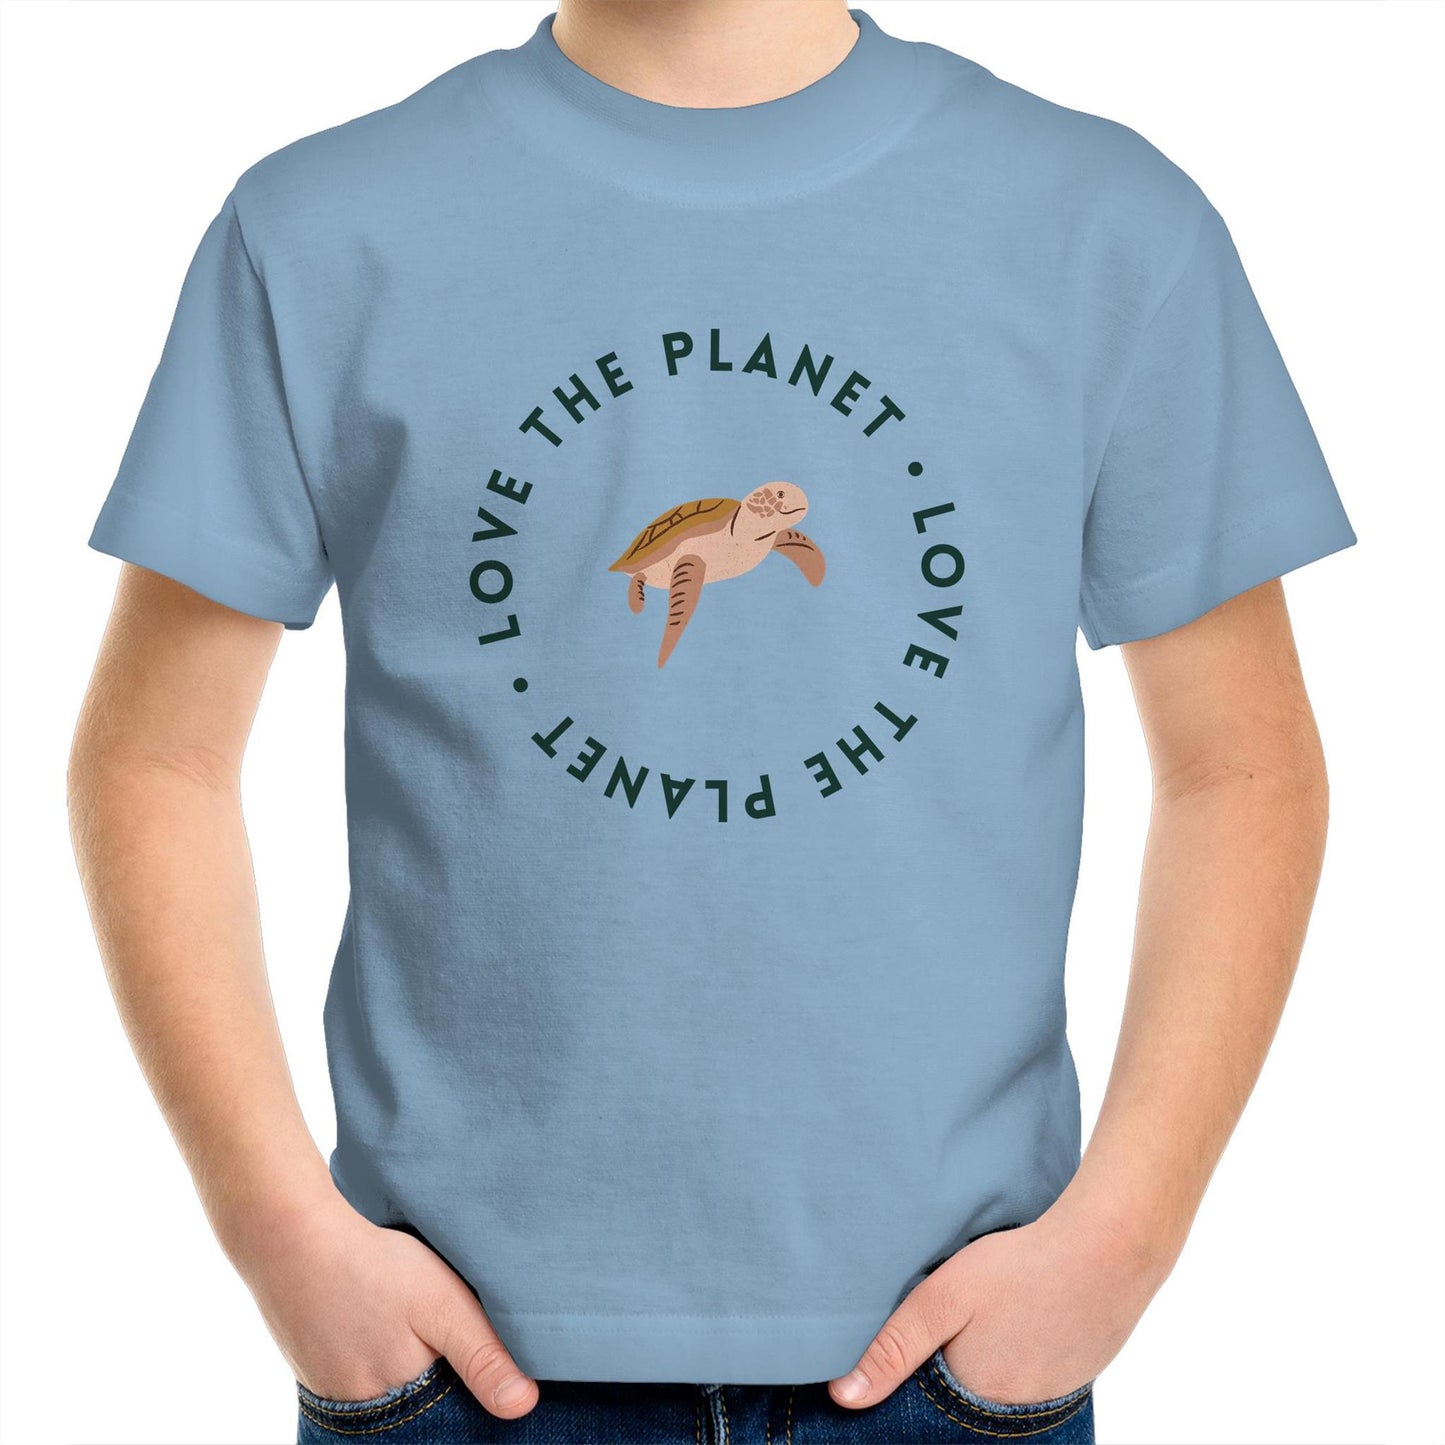 Love The Planet - Kids Youth Crew T-Shirt Carolina Blue Kids Youth T-shirt animal Environment